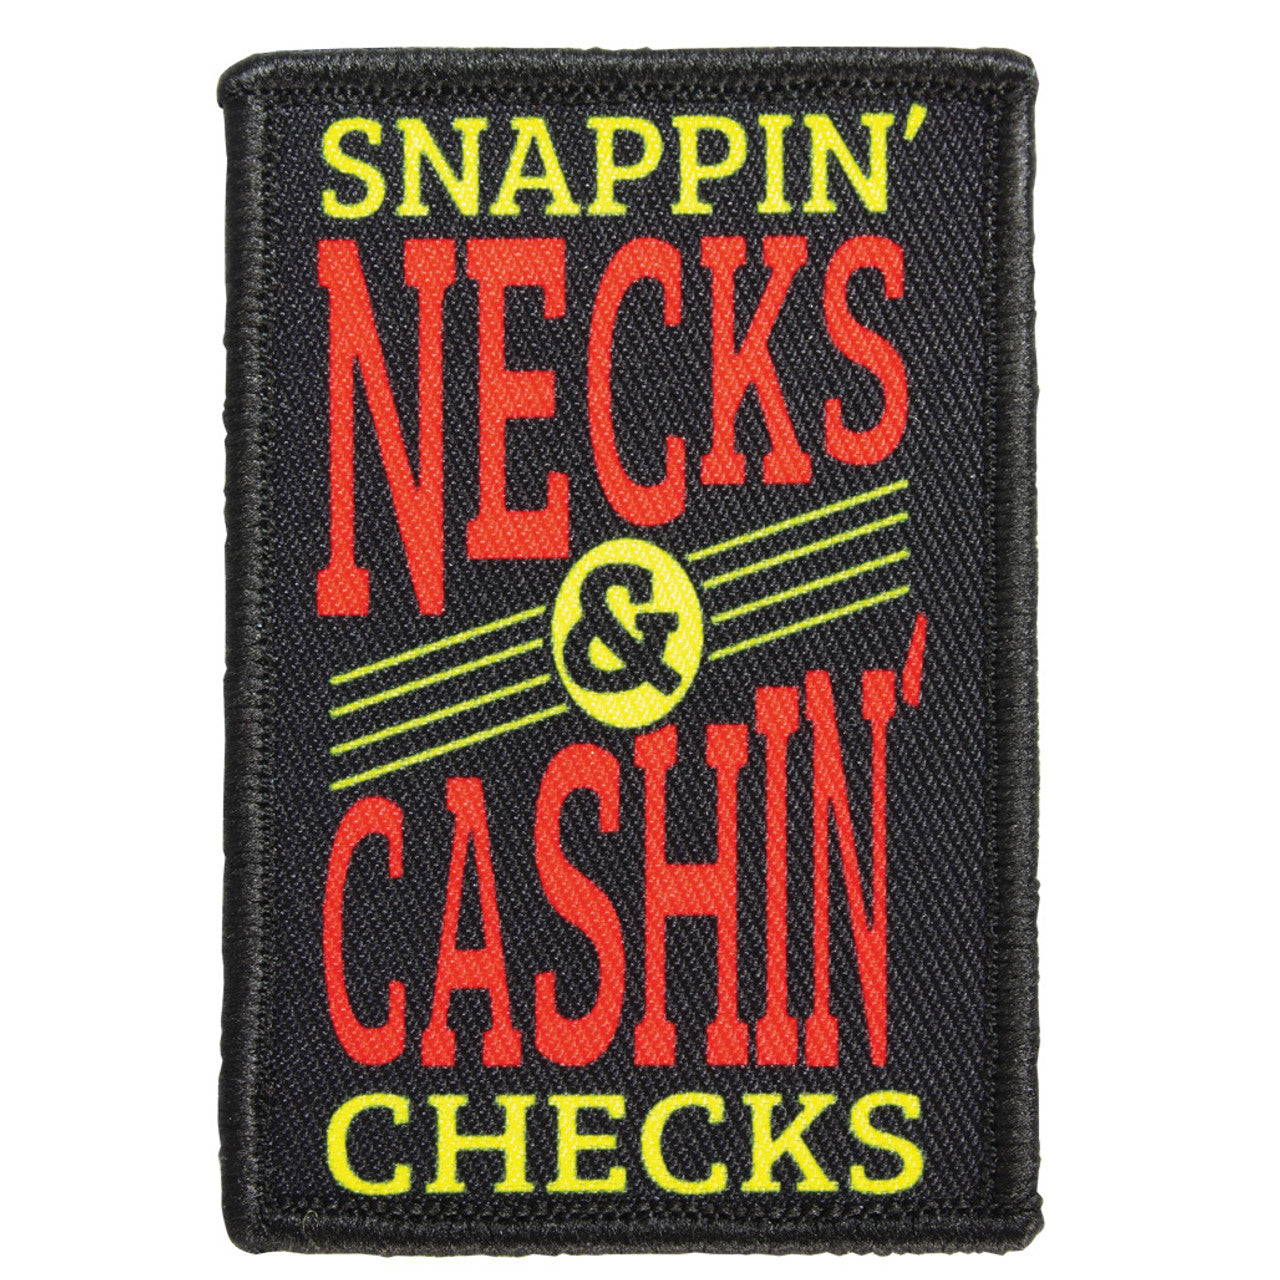 "SNAPPIN' NECK & CASHIN' CHECKS" MORALE PATCH